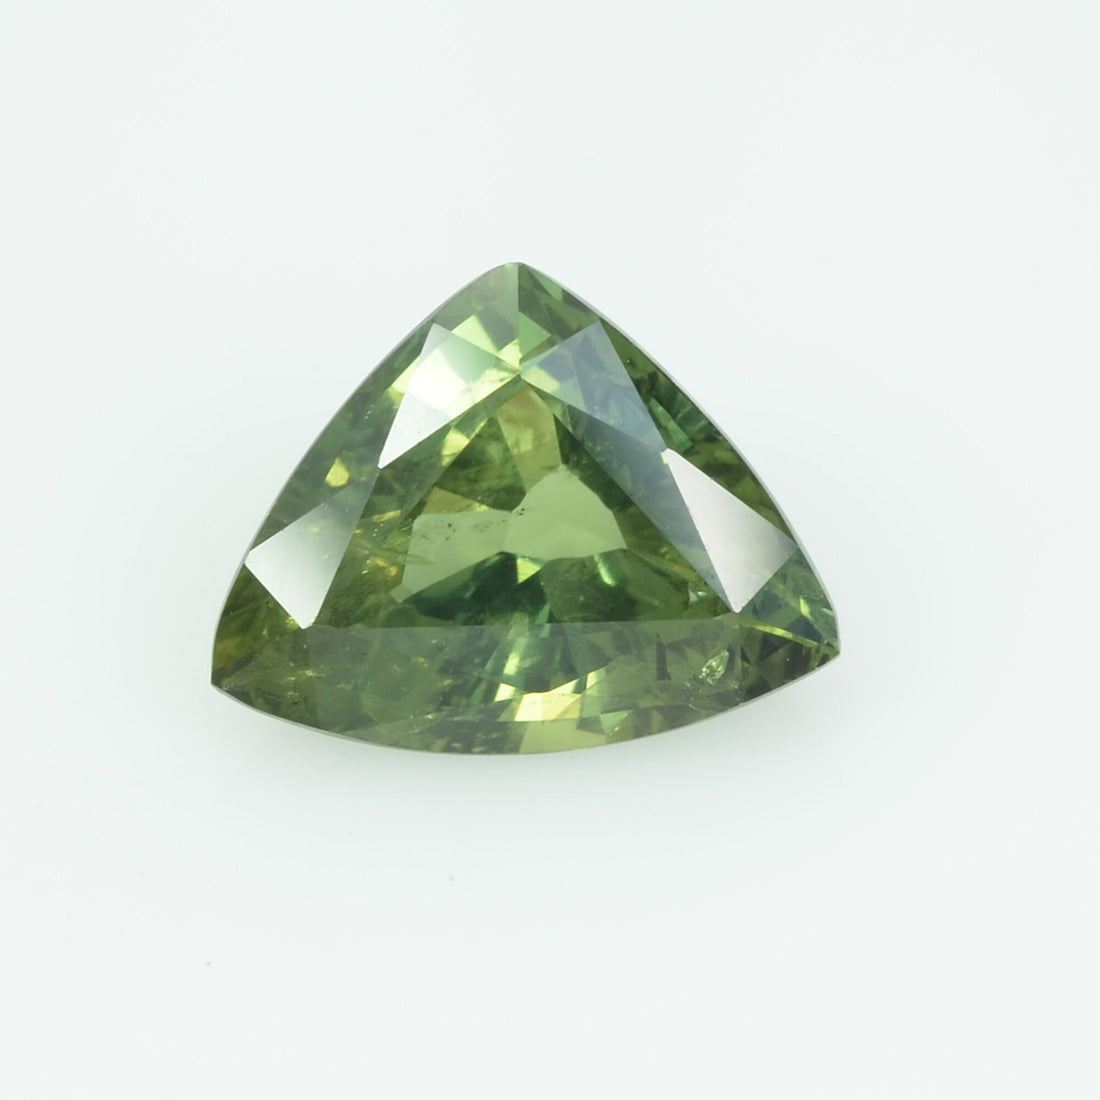 3.02 Cts Natural Green Sapphire Loose Gemstone Trillion Cut